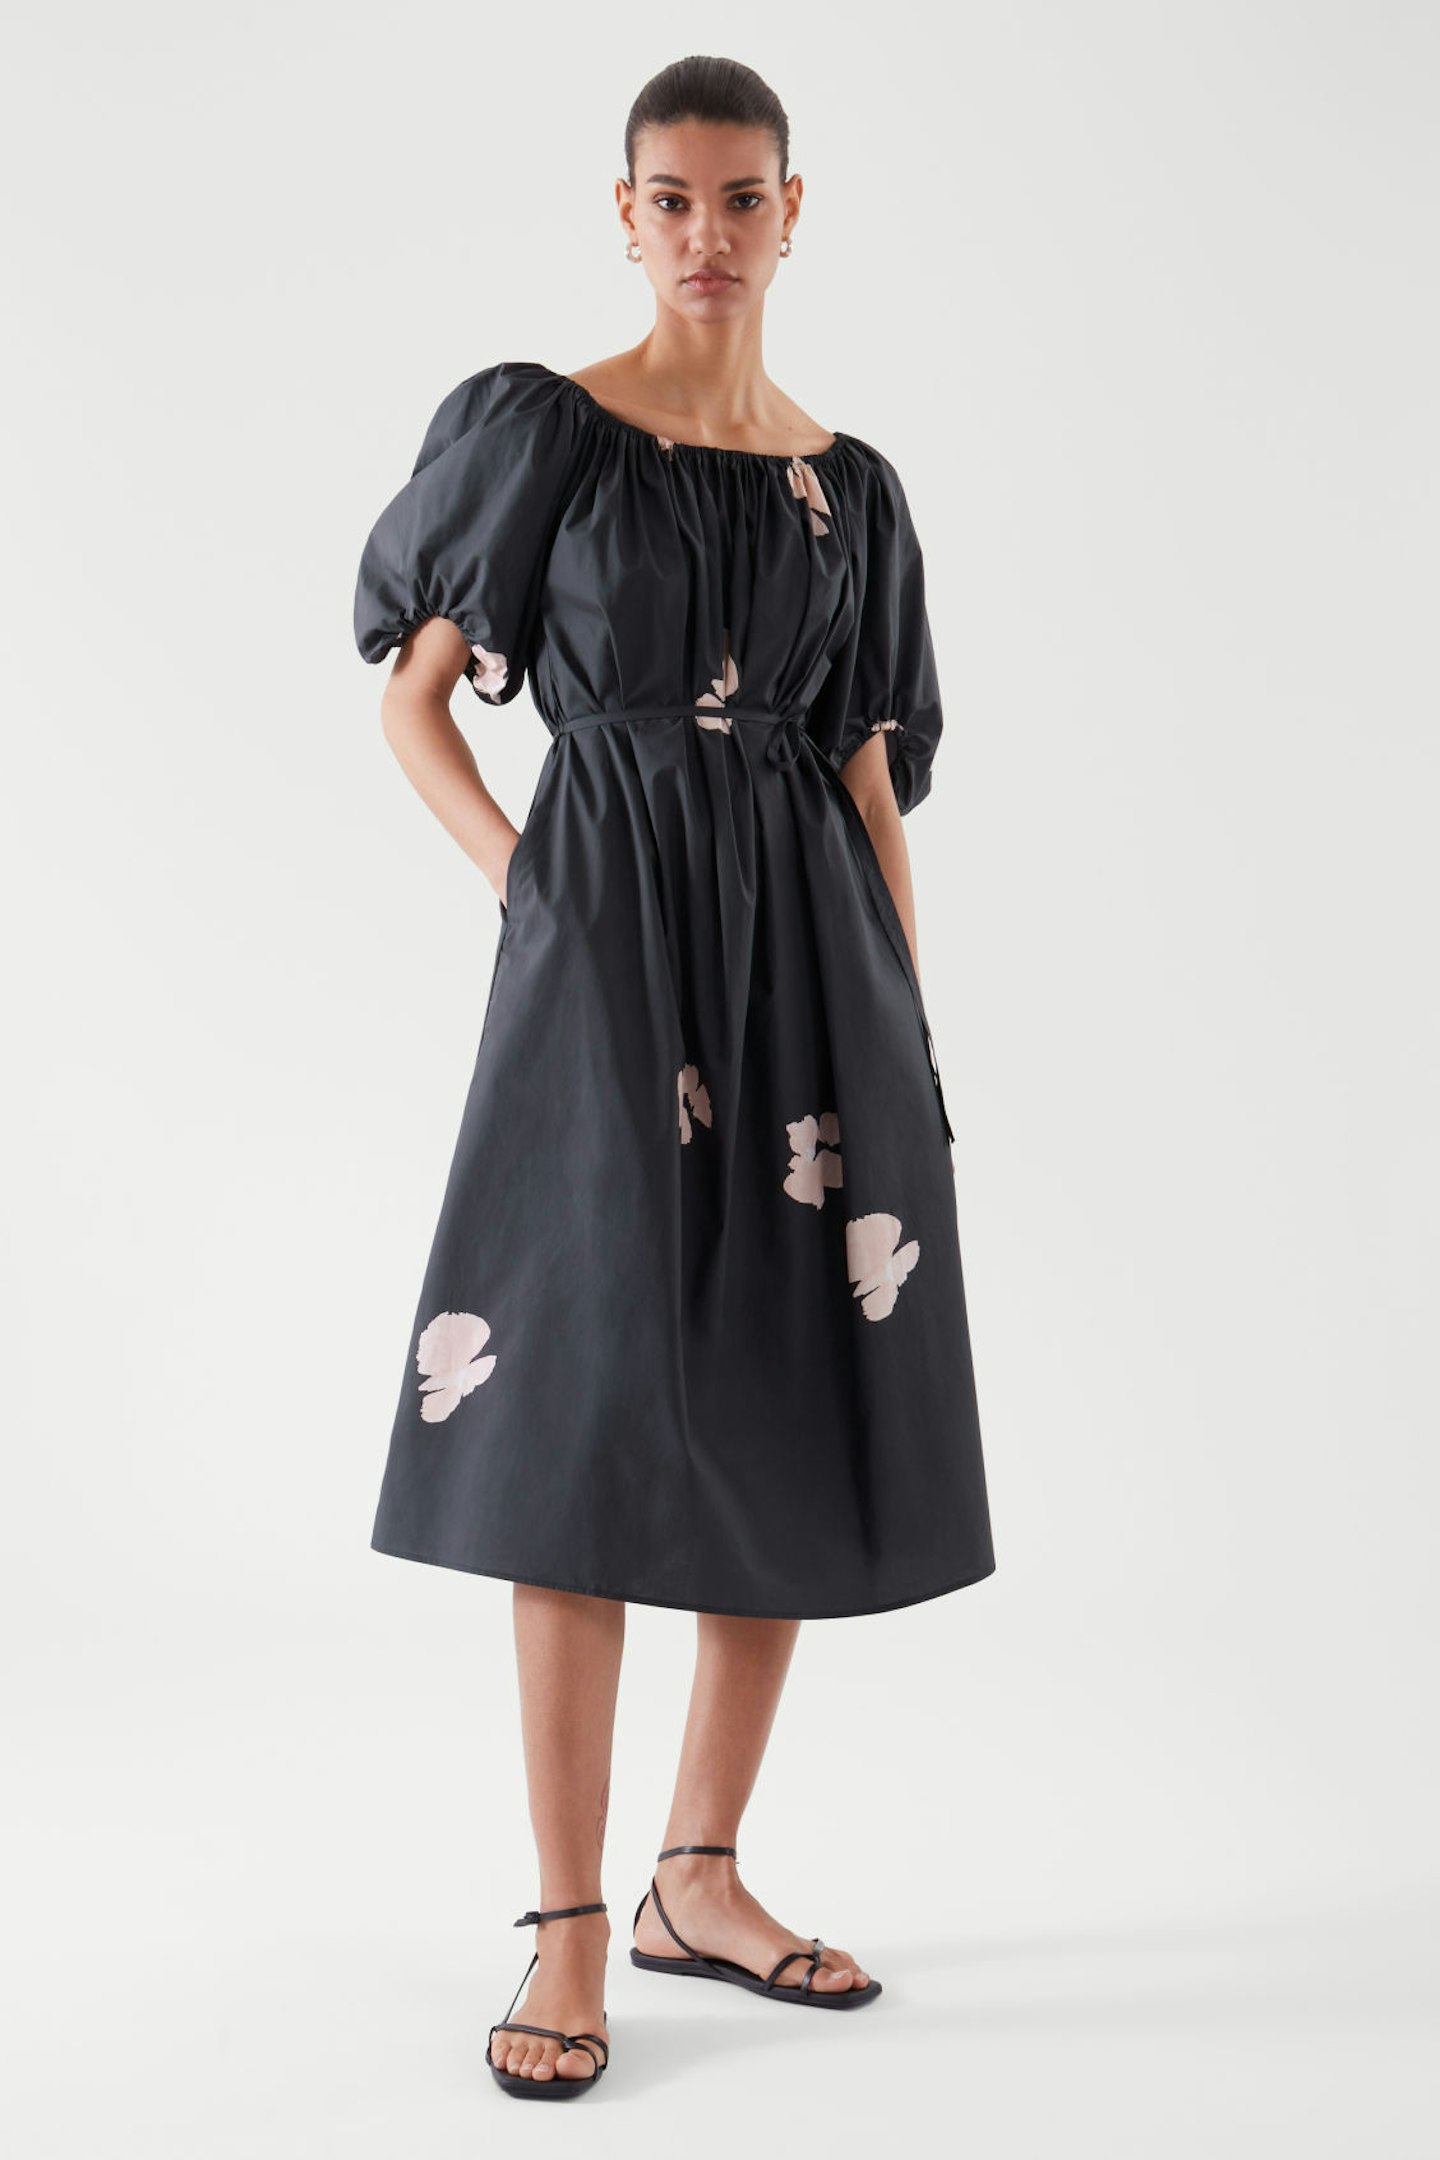 COS, Puff Sleeve Dress, £79